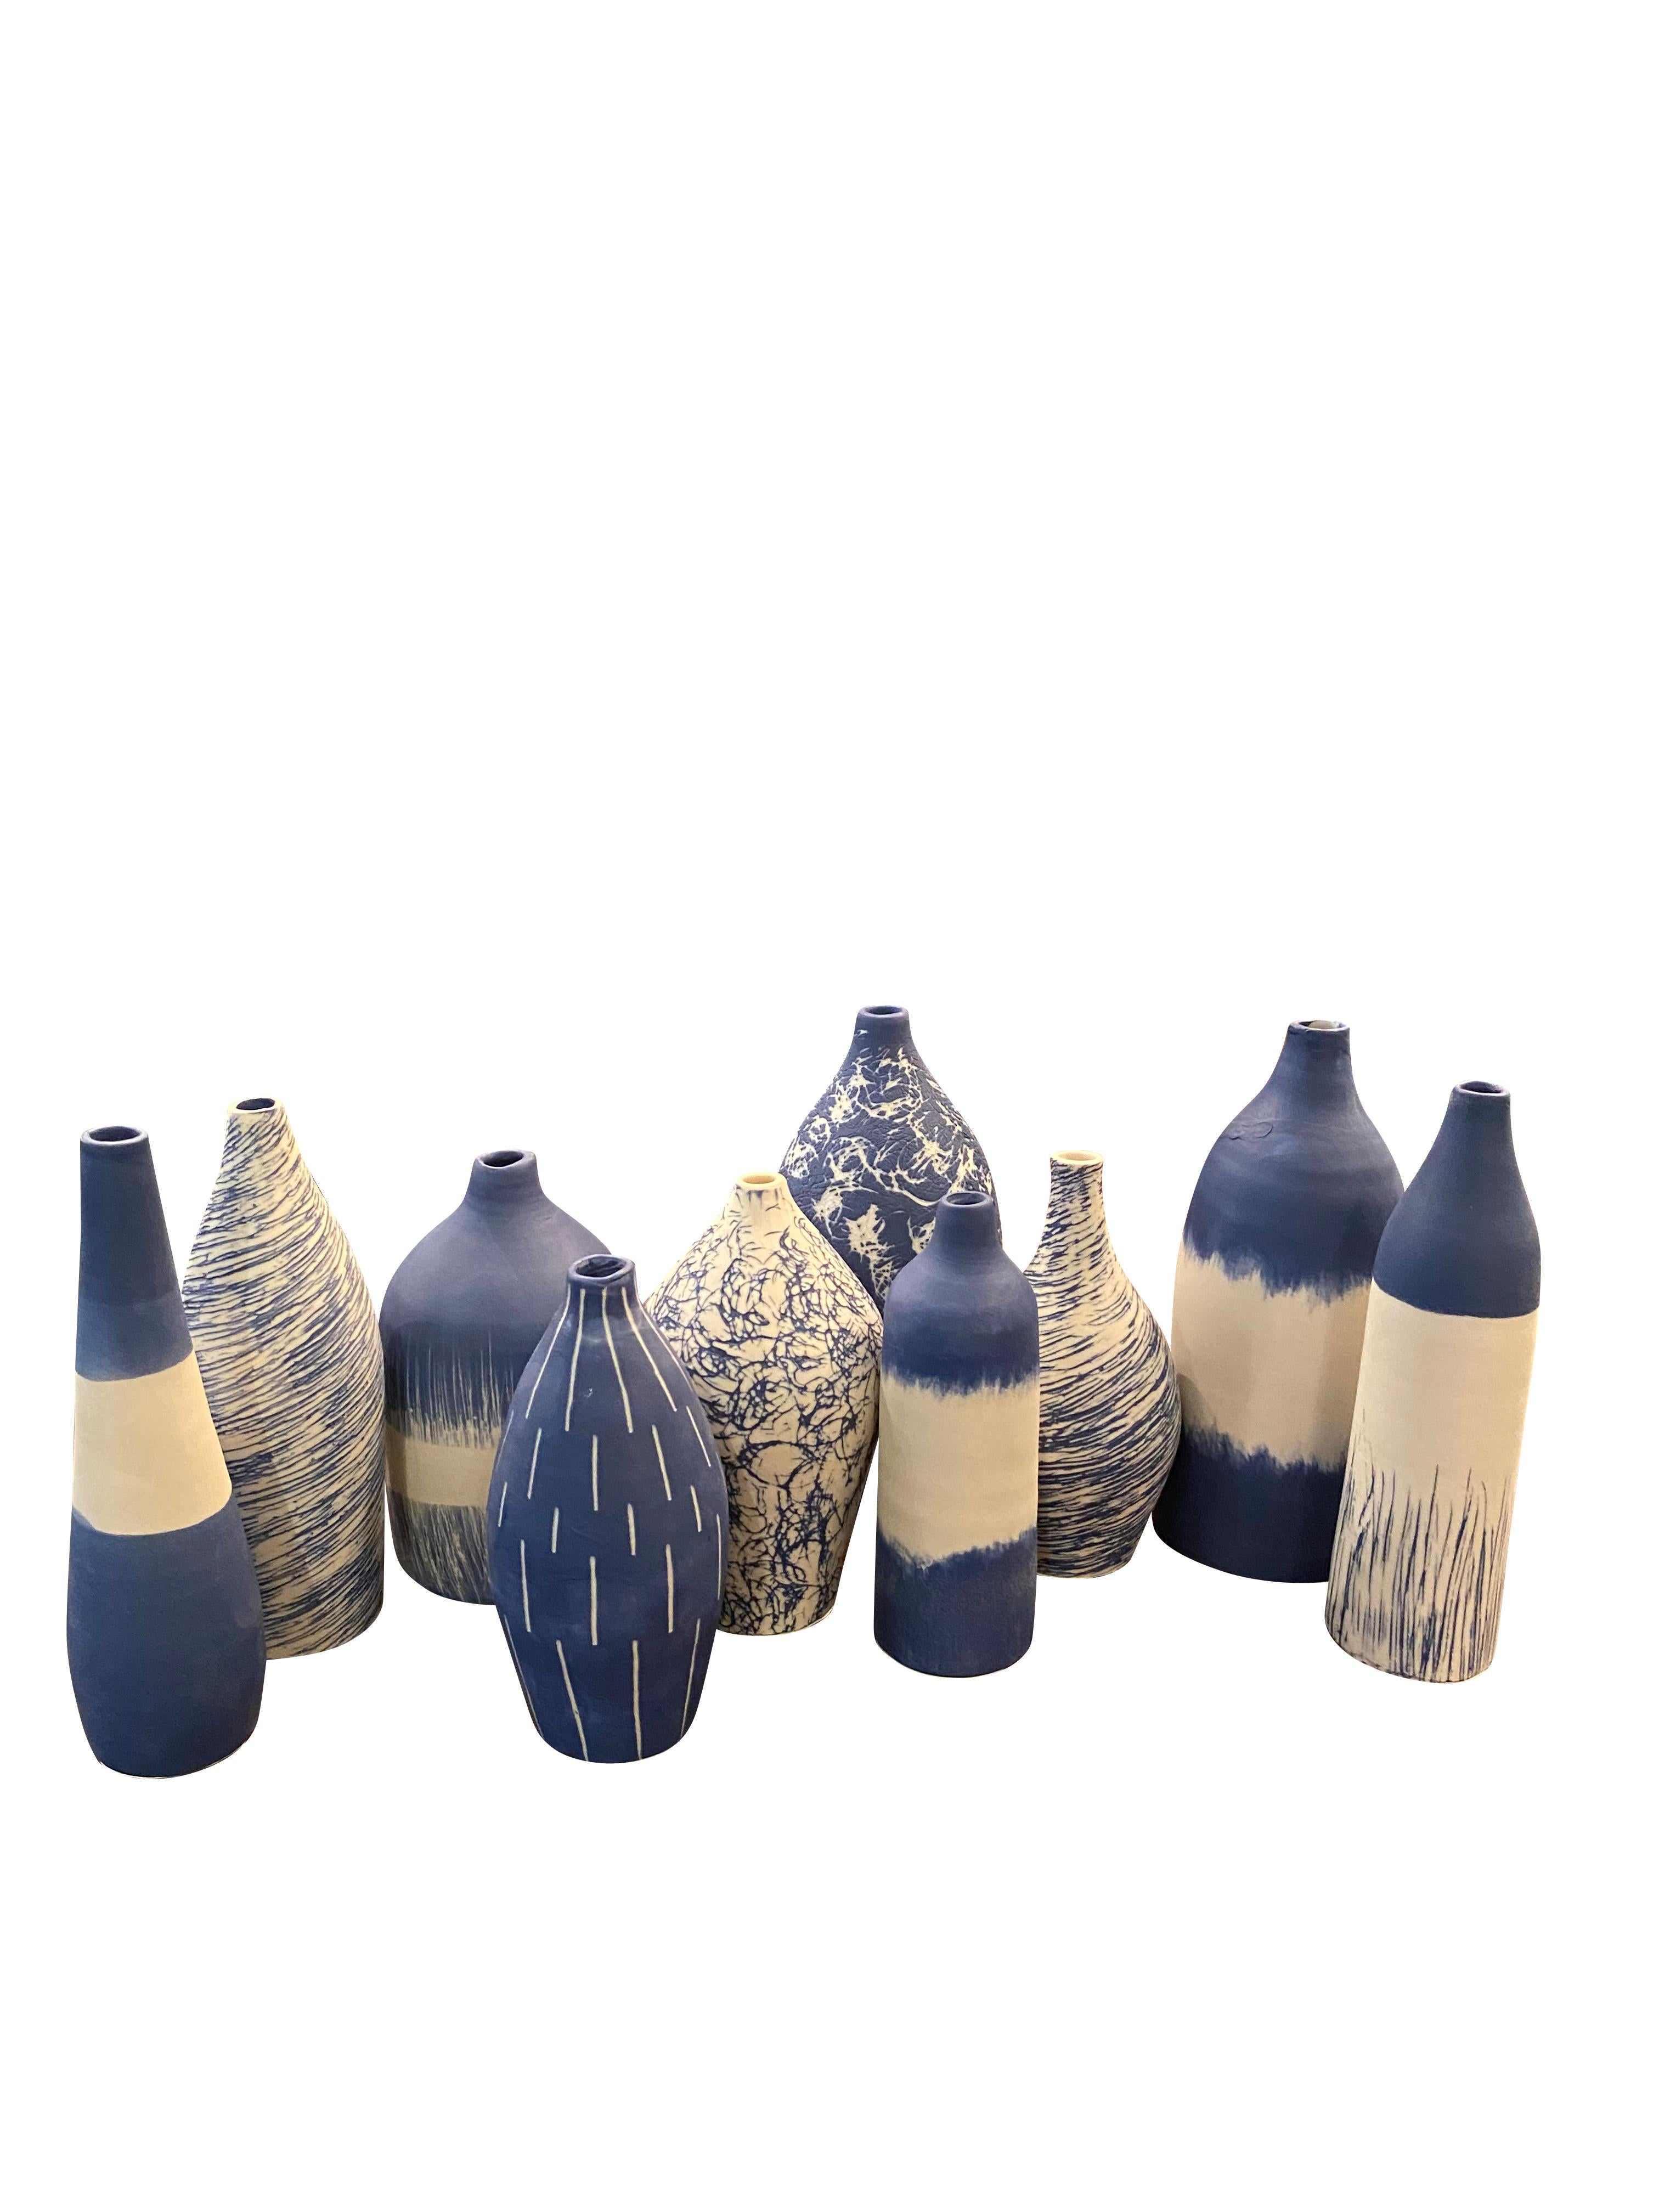 Ceramic Blue and White Swirl Design Hand Made Vase, Italy, Contemporary